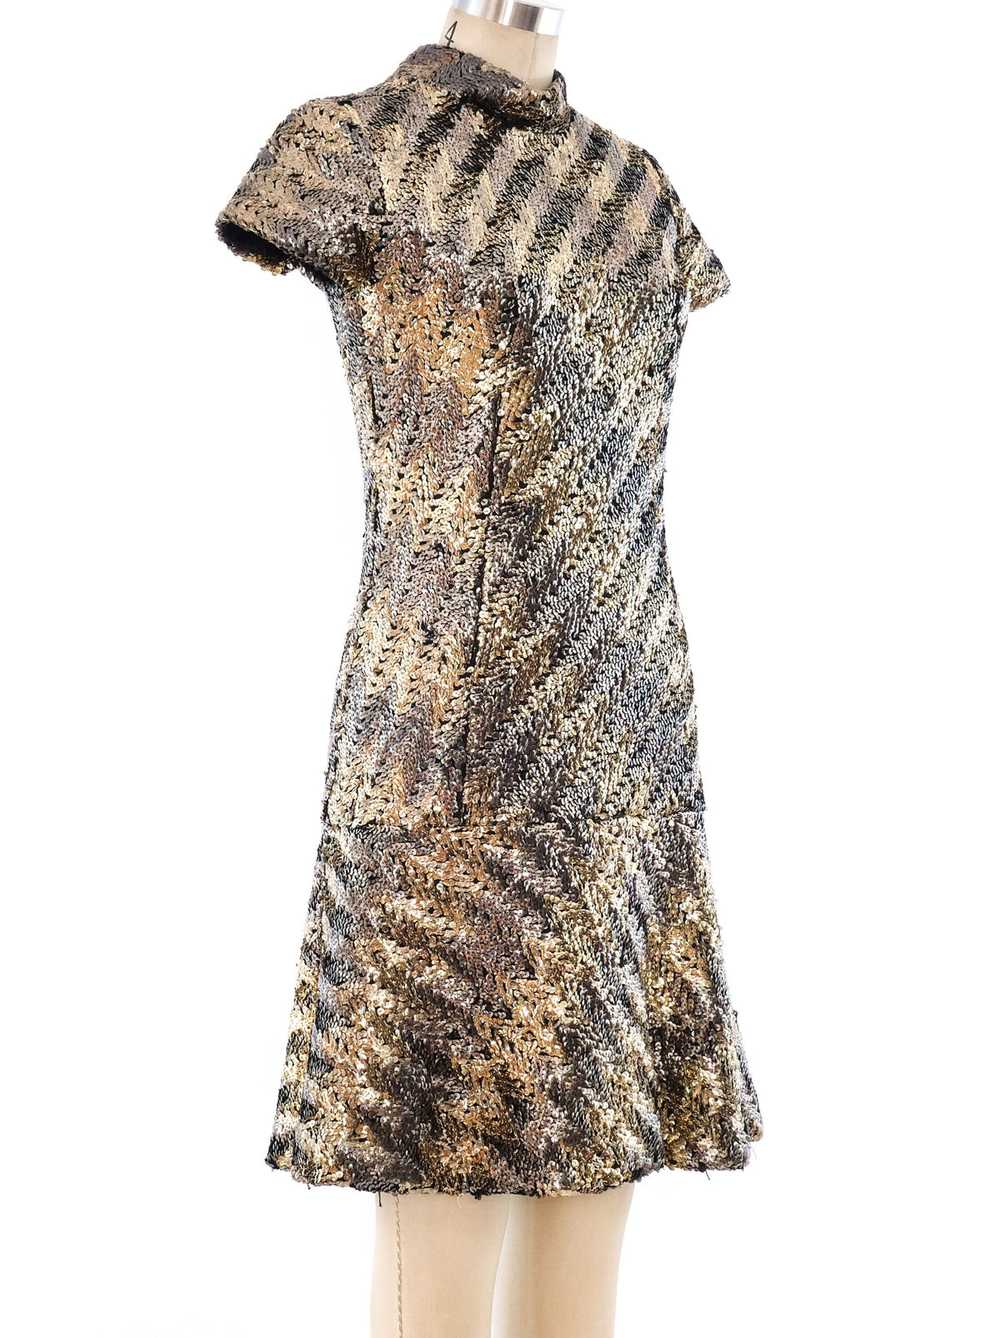 Chevron Sequin Embellished Dress - image 3